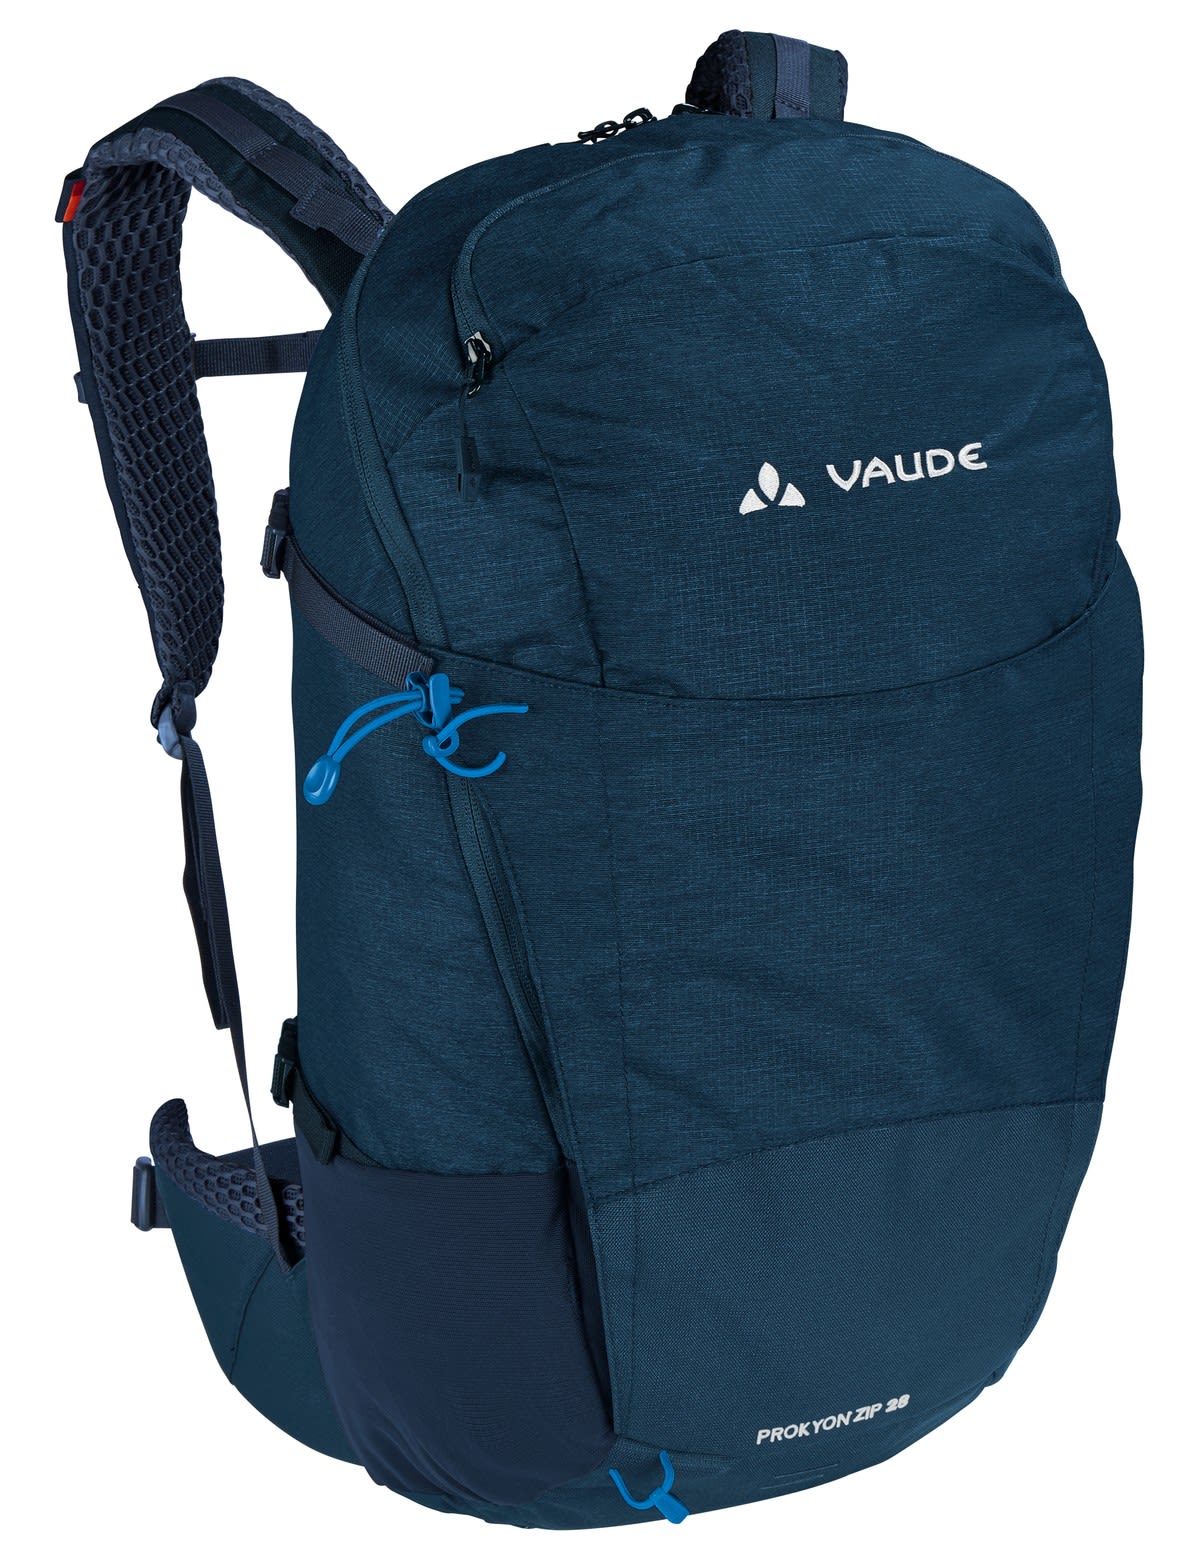 Vaude Prokyon Zip 28 Blau- Alpin- und Trekkingruckscke- Grsse 28l - Farbe Baltic Sea